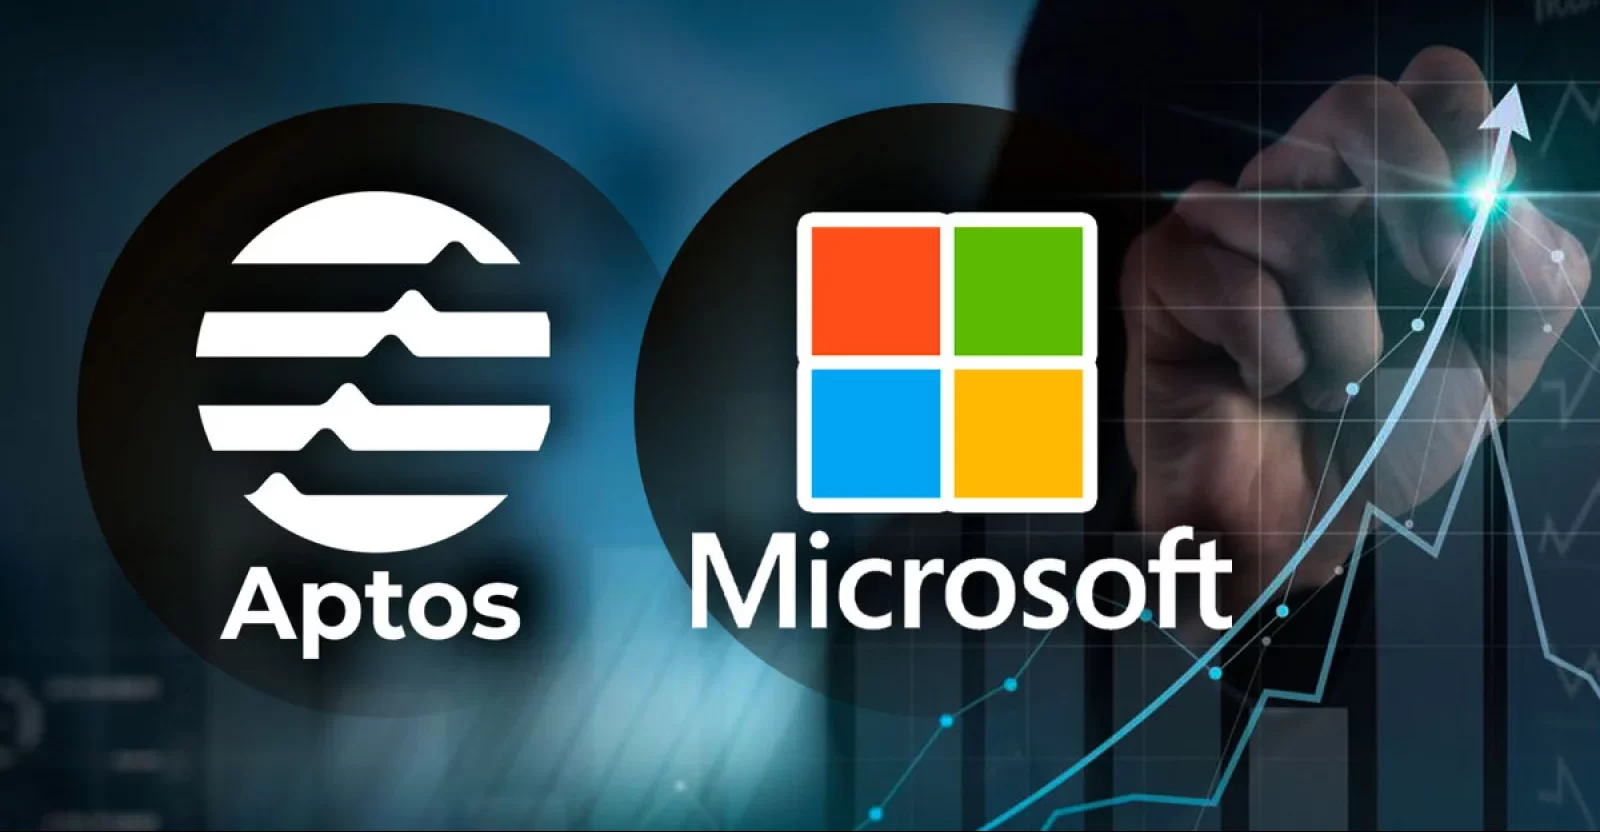 Aptos Allies with Microsoft, Brevan Howard and SK Telecom for DeFi